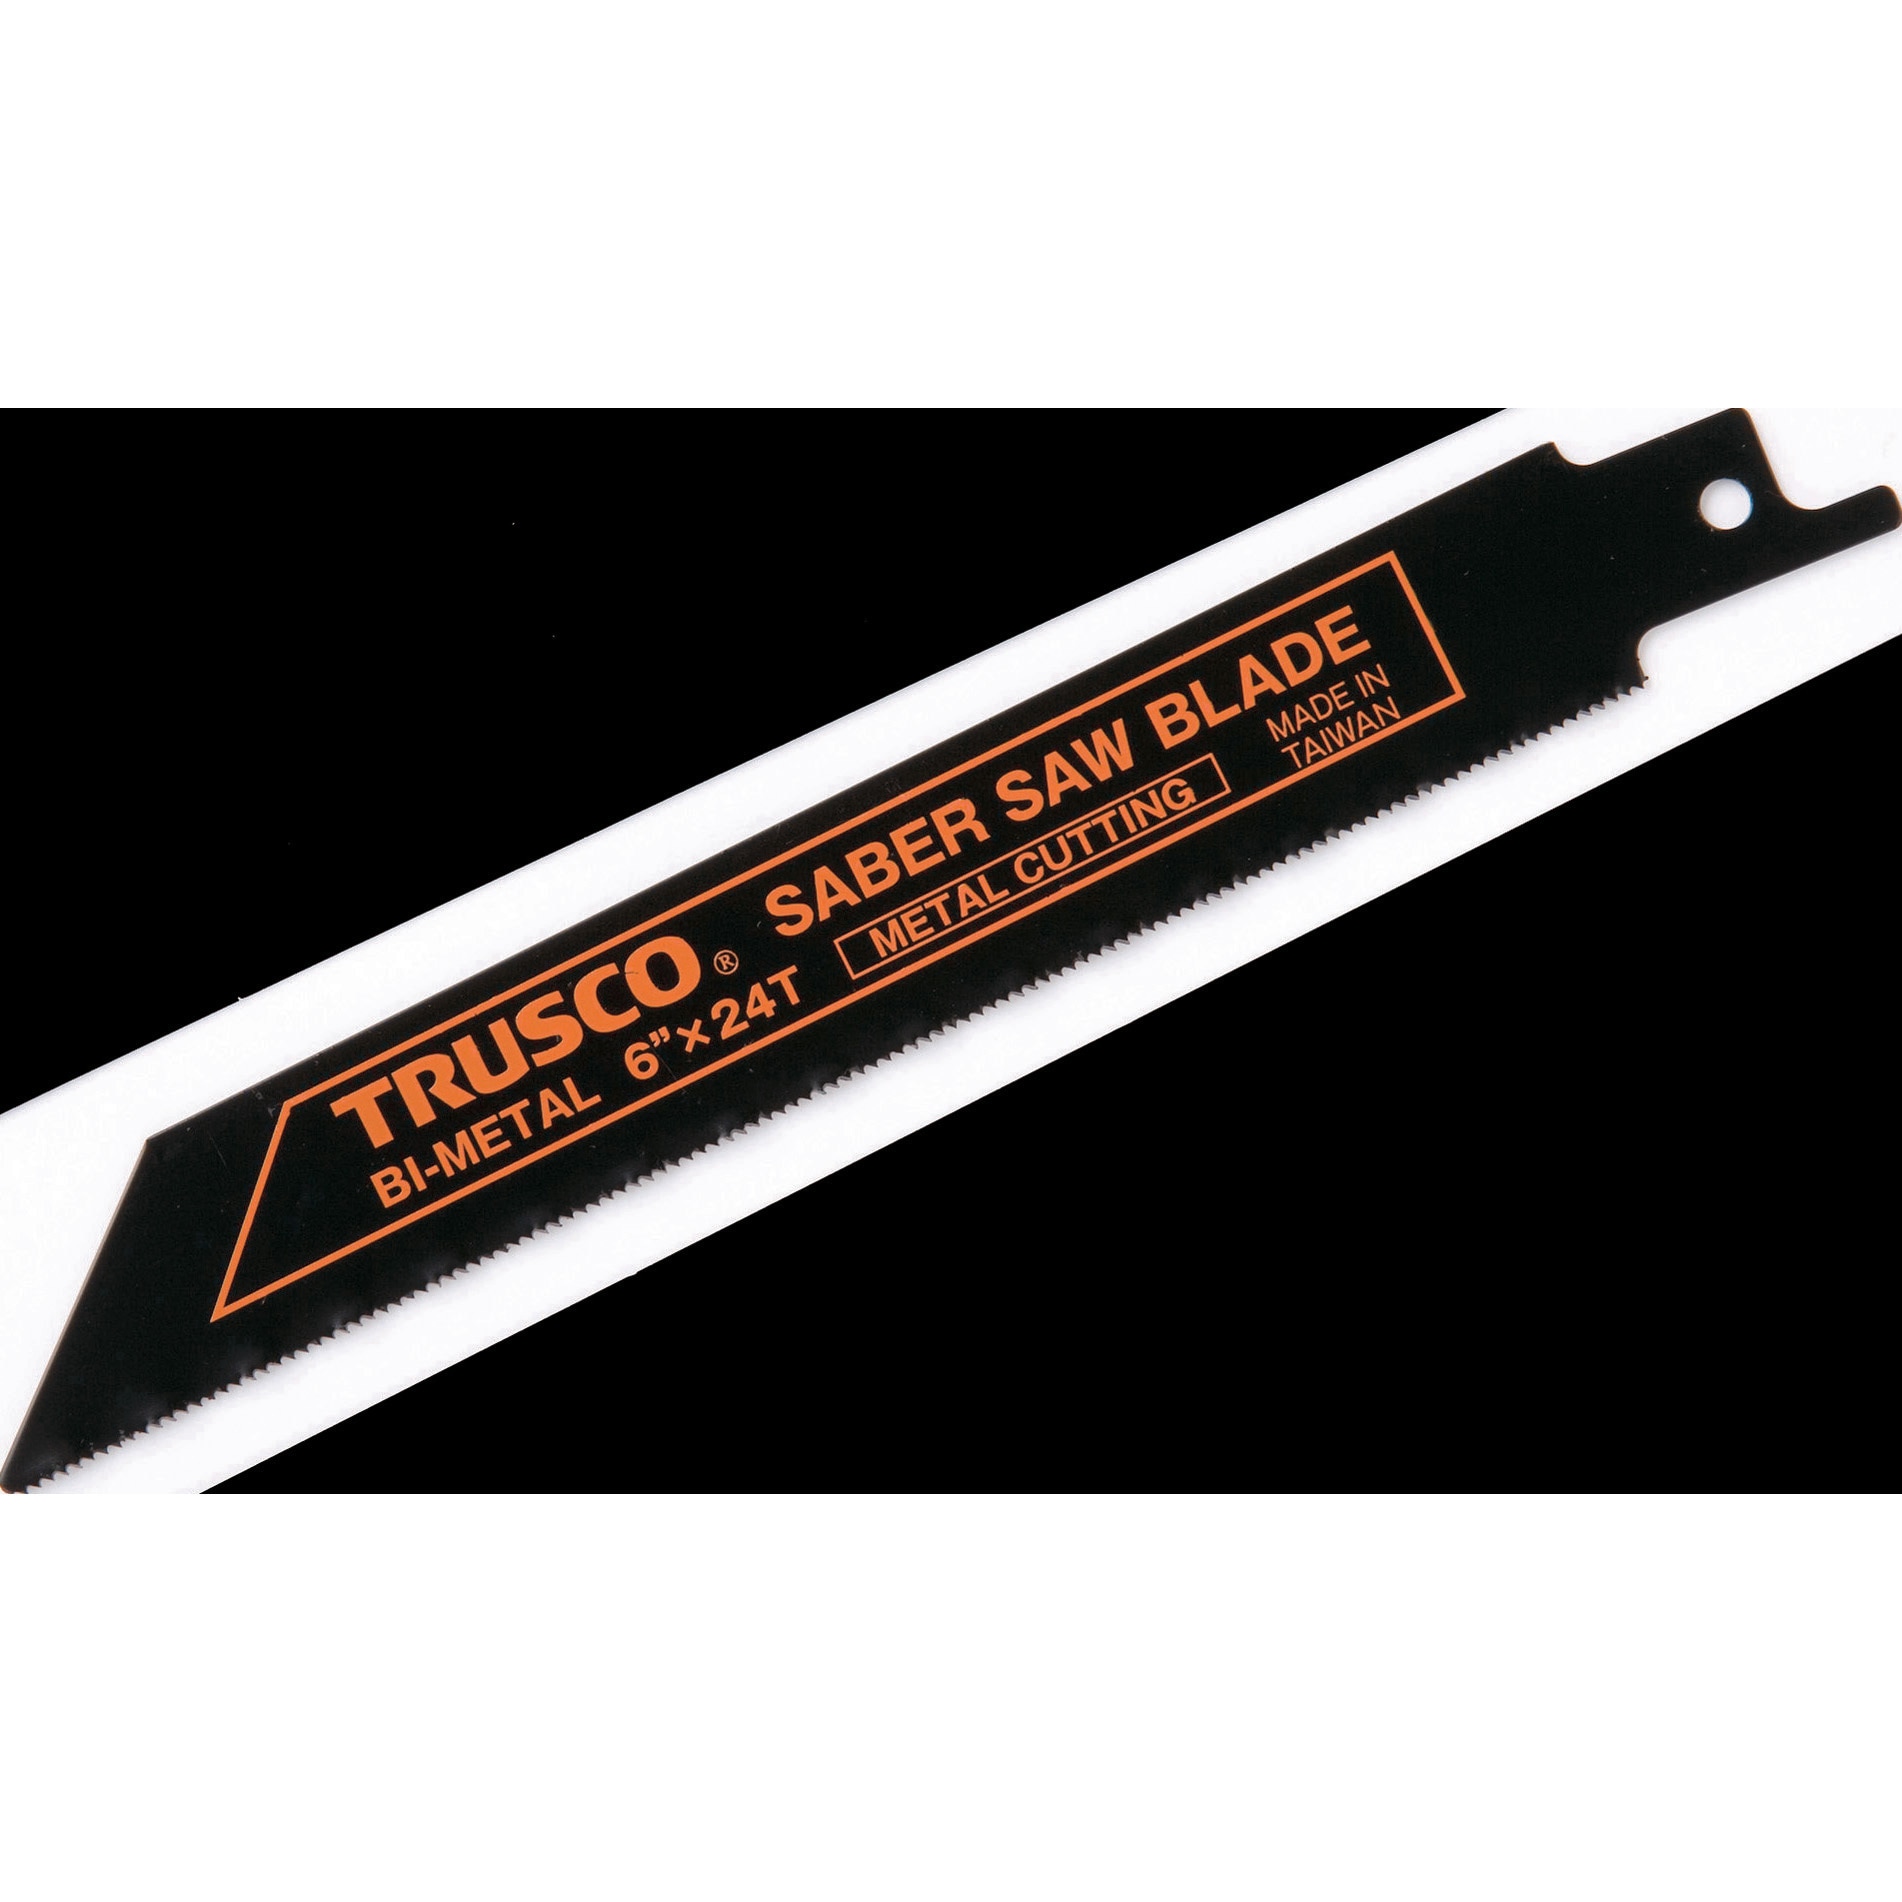 TRUSCO(トラスコ) バイメタルセーバーソーブレード50P 150mmX0.9厚X14山 THS15014-50P 通販 